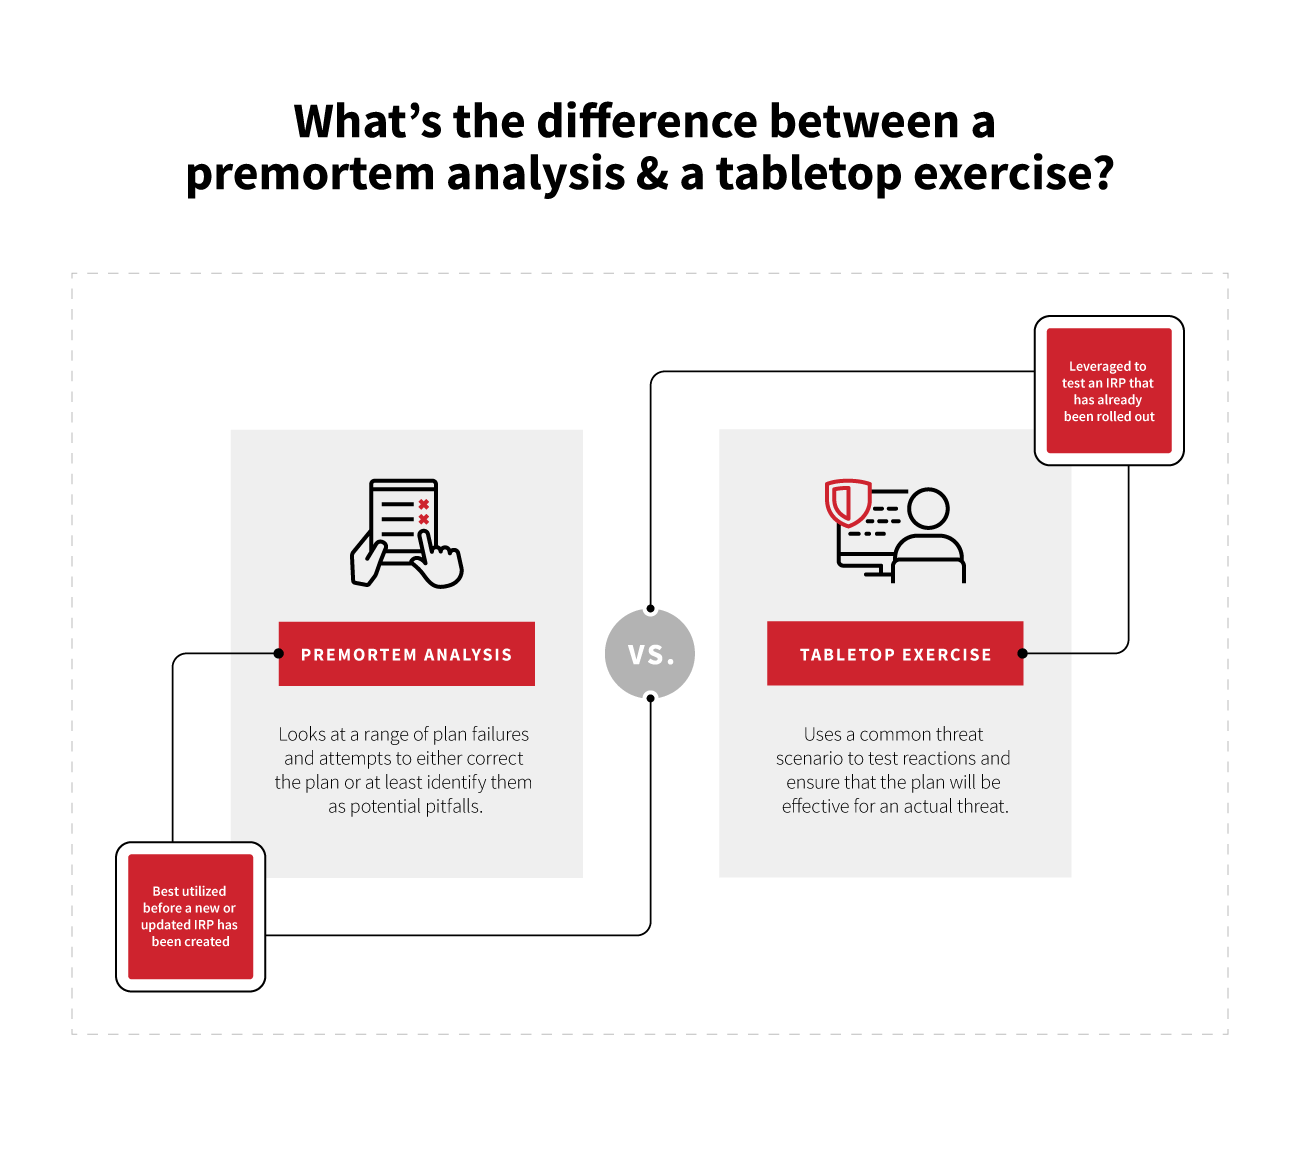 Premortem analysis vs tabletop exercise